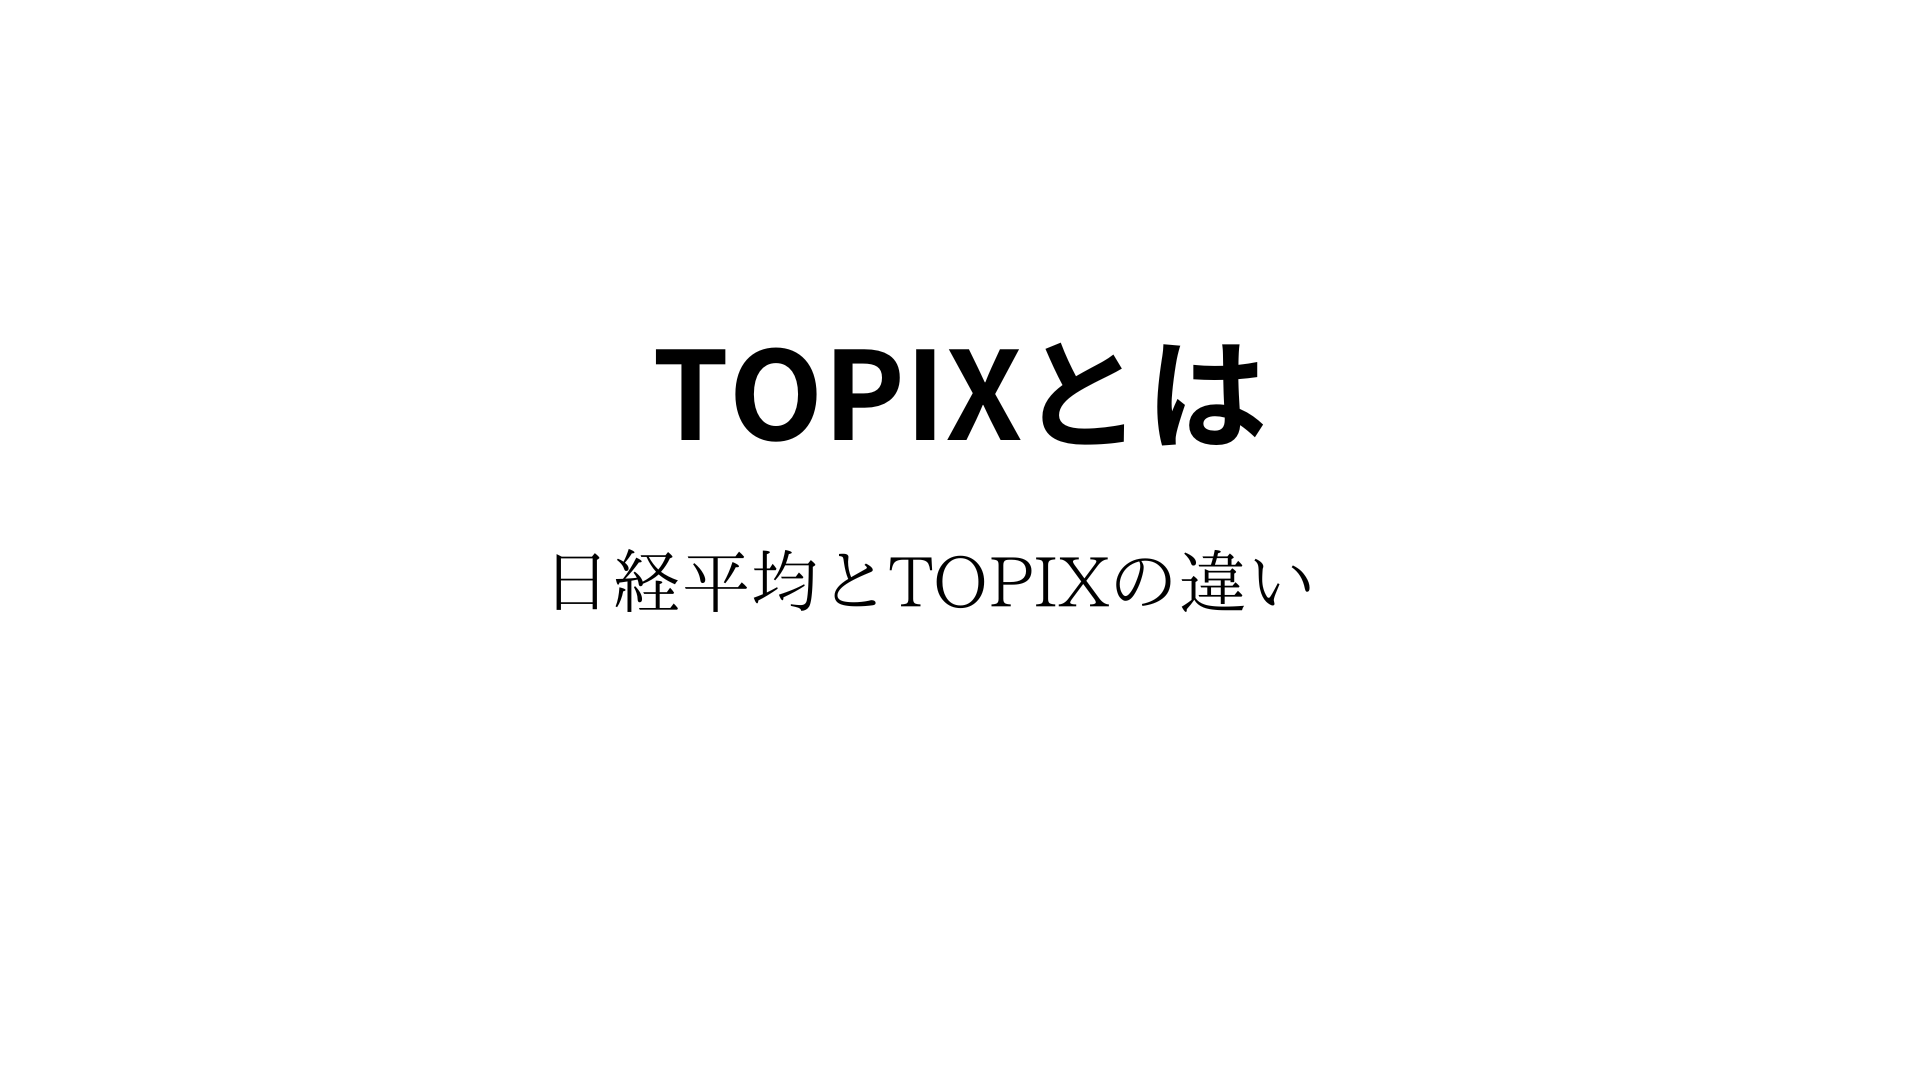 Topixとは こうせいの素人投資ブログ 